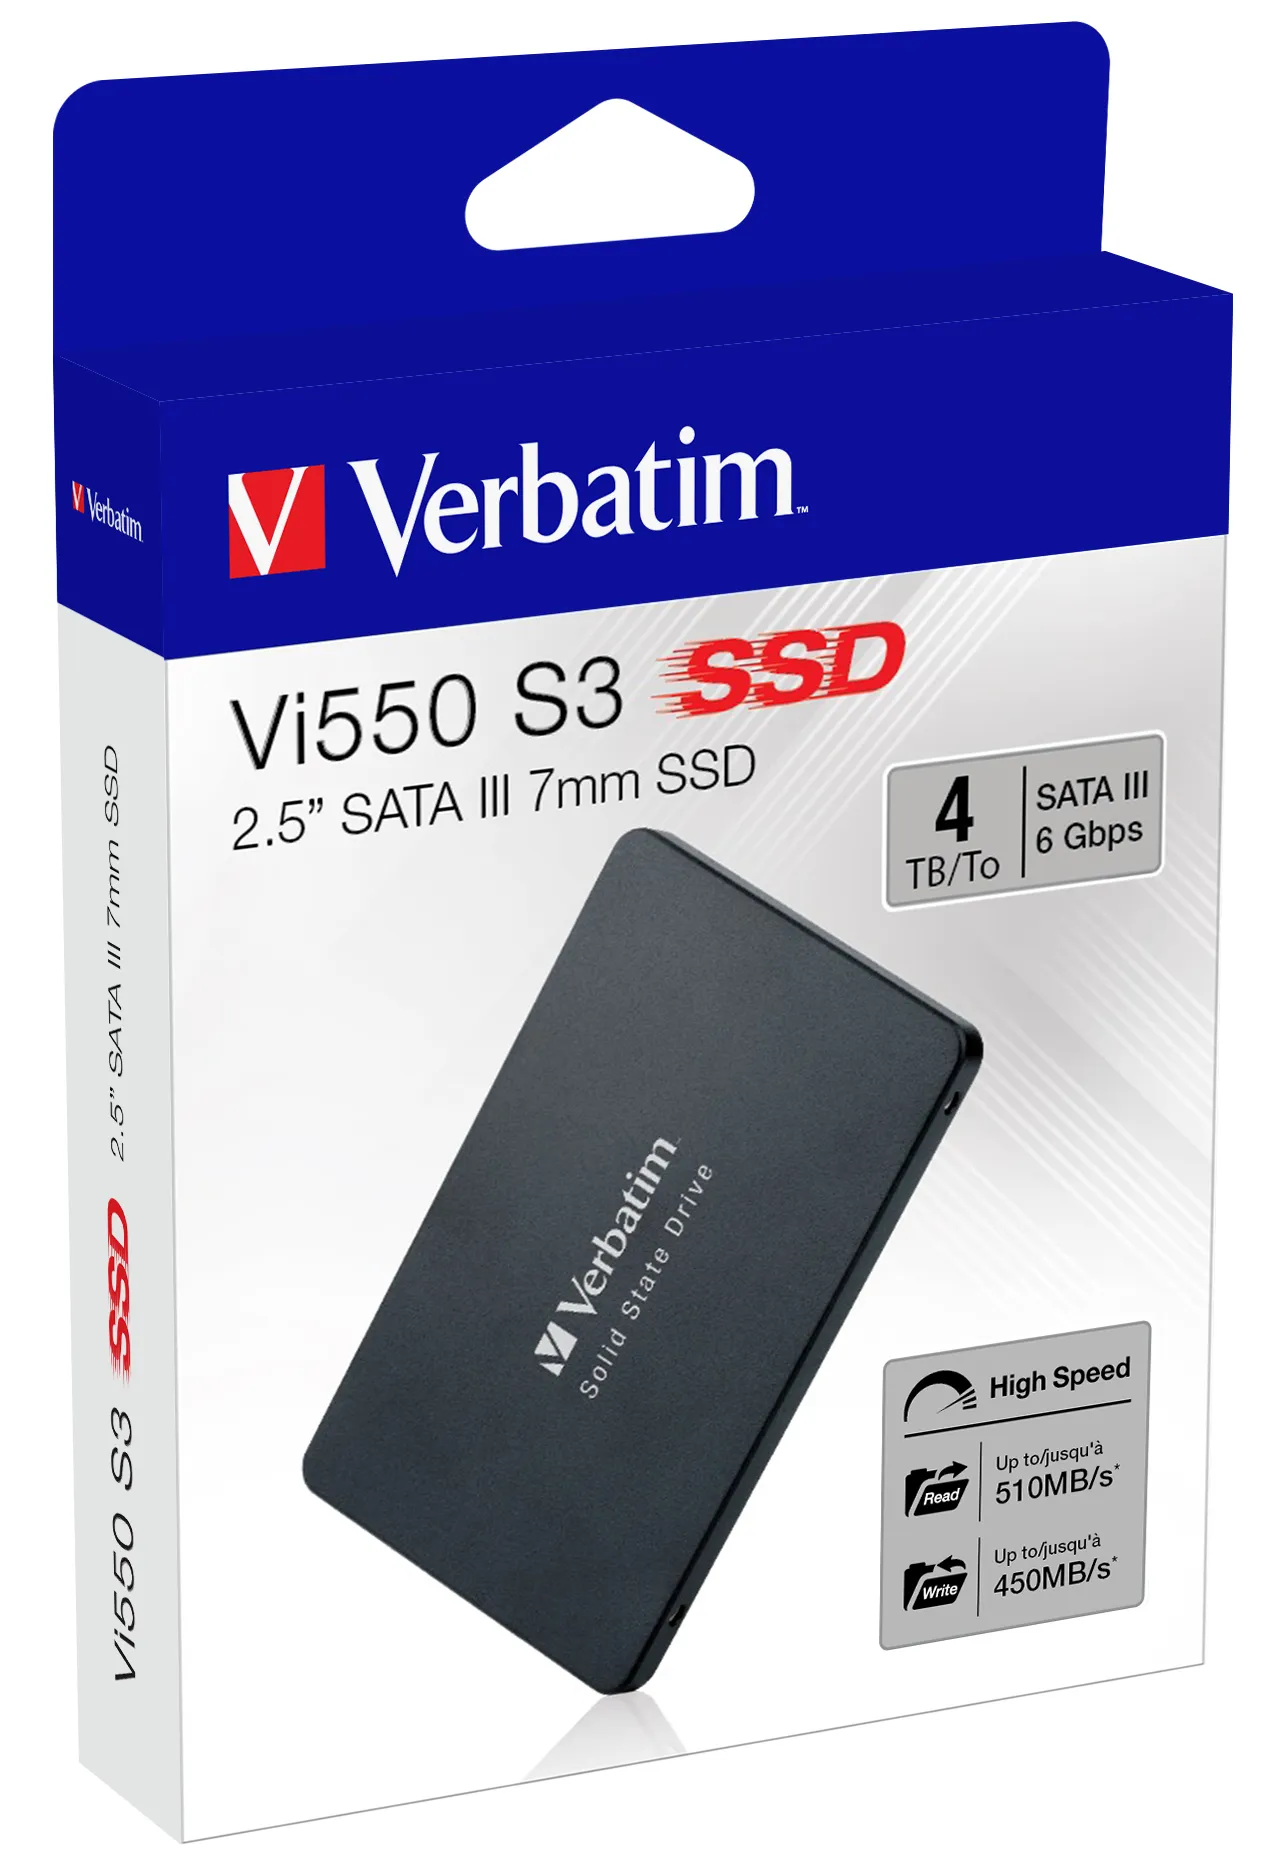 Vente Verbatim Vi550 S3 Verbatim au meilleur prix - visuel 10